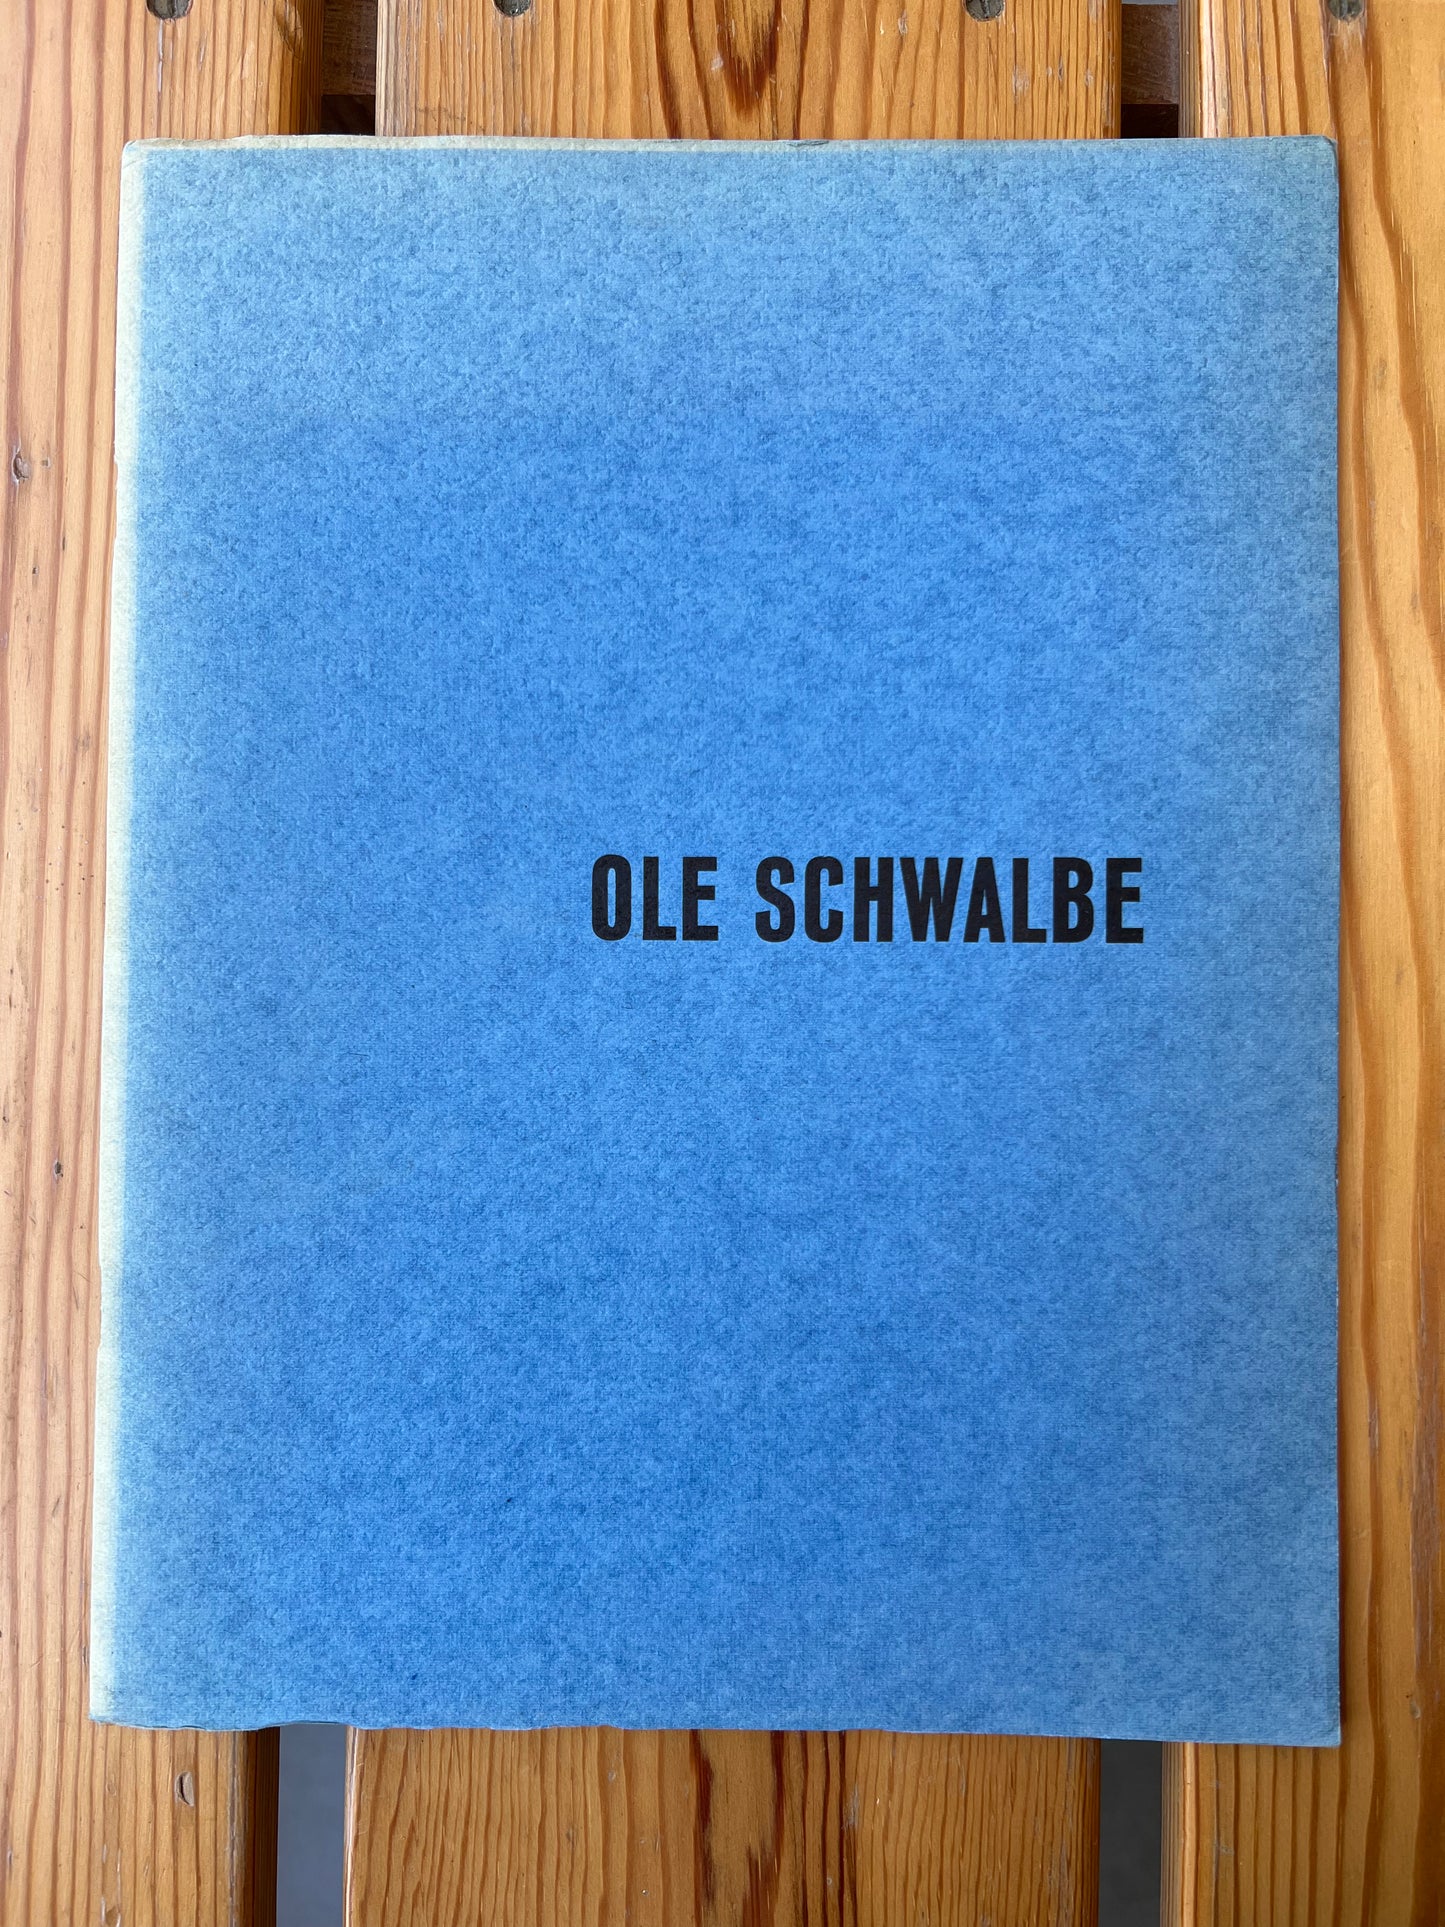 Galerie Børge Birch. “Ole Schwalbe”, 1955-1960